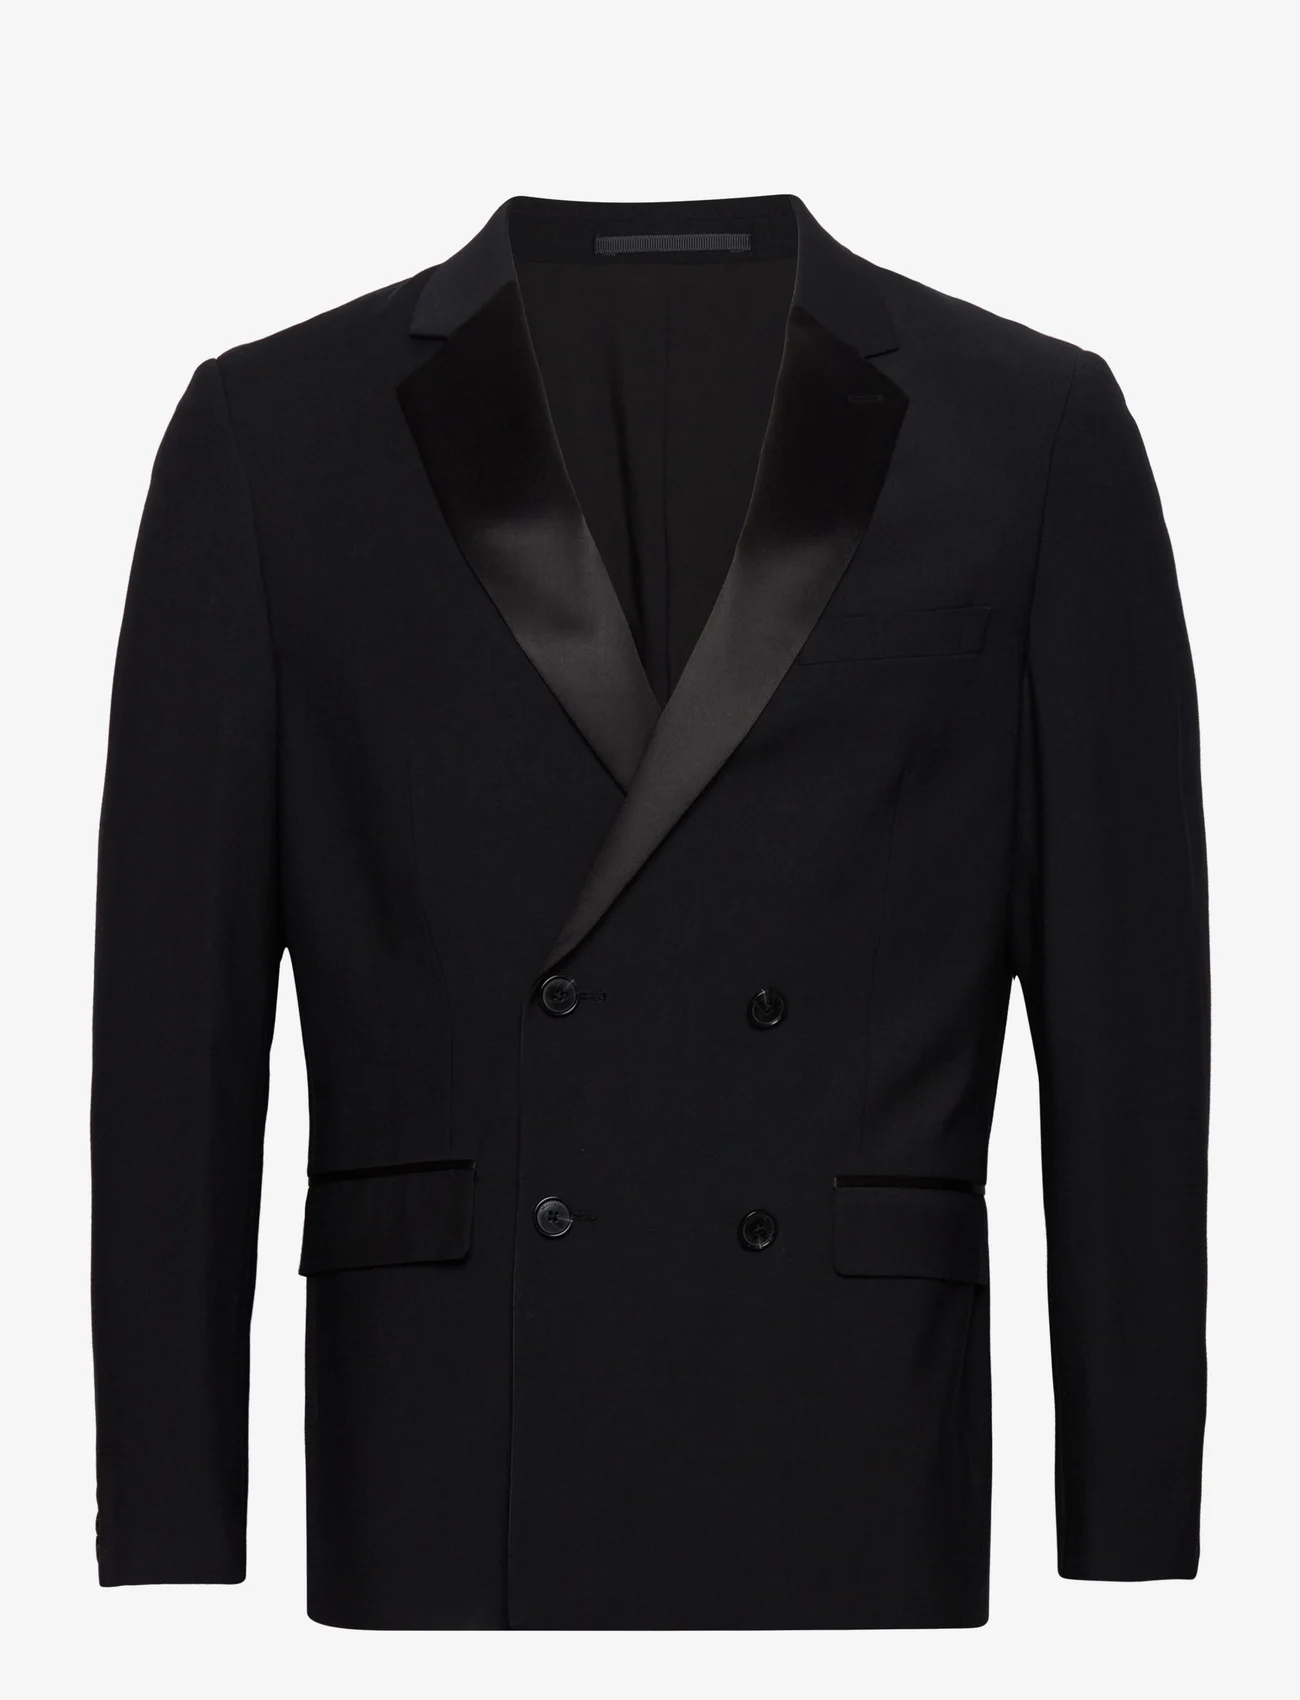 Matinique - MAdouble Tuxedo - blazers met dubbele knopen - black - 0